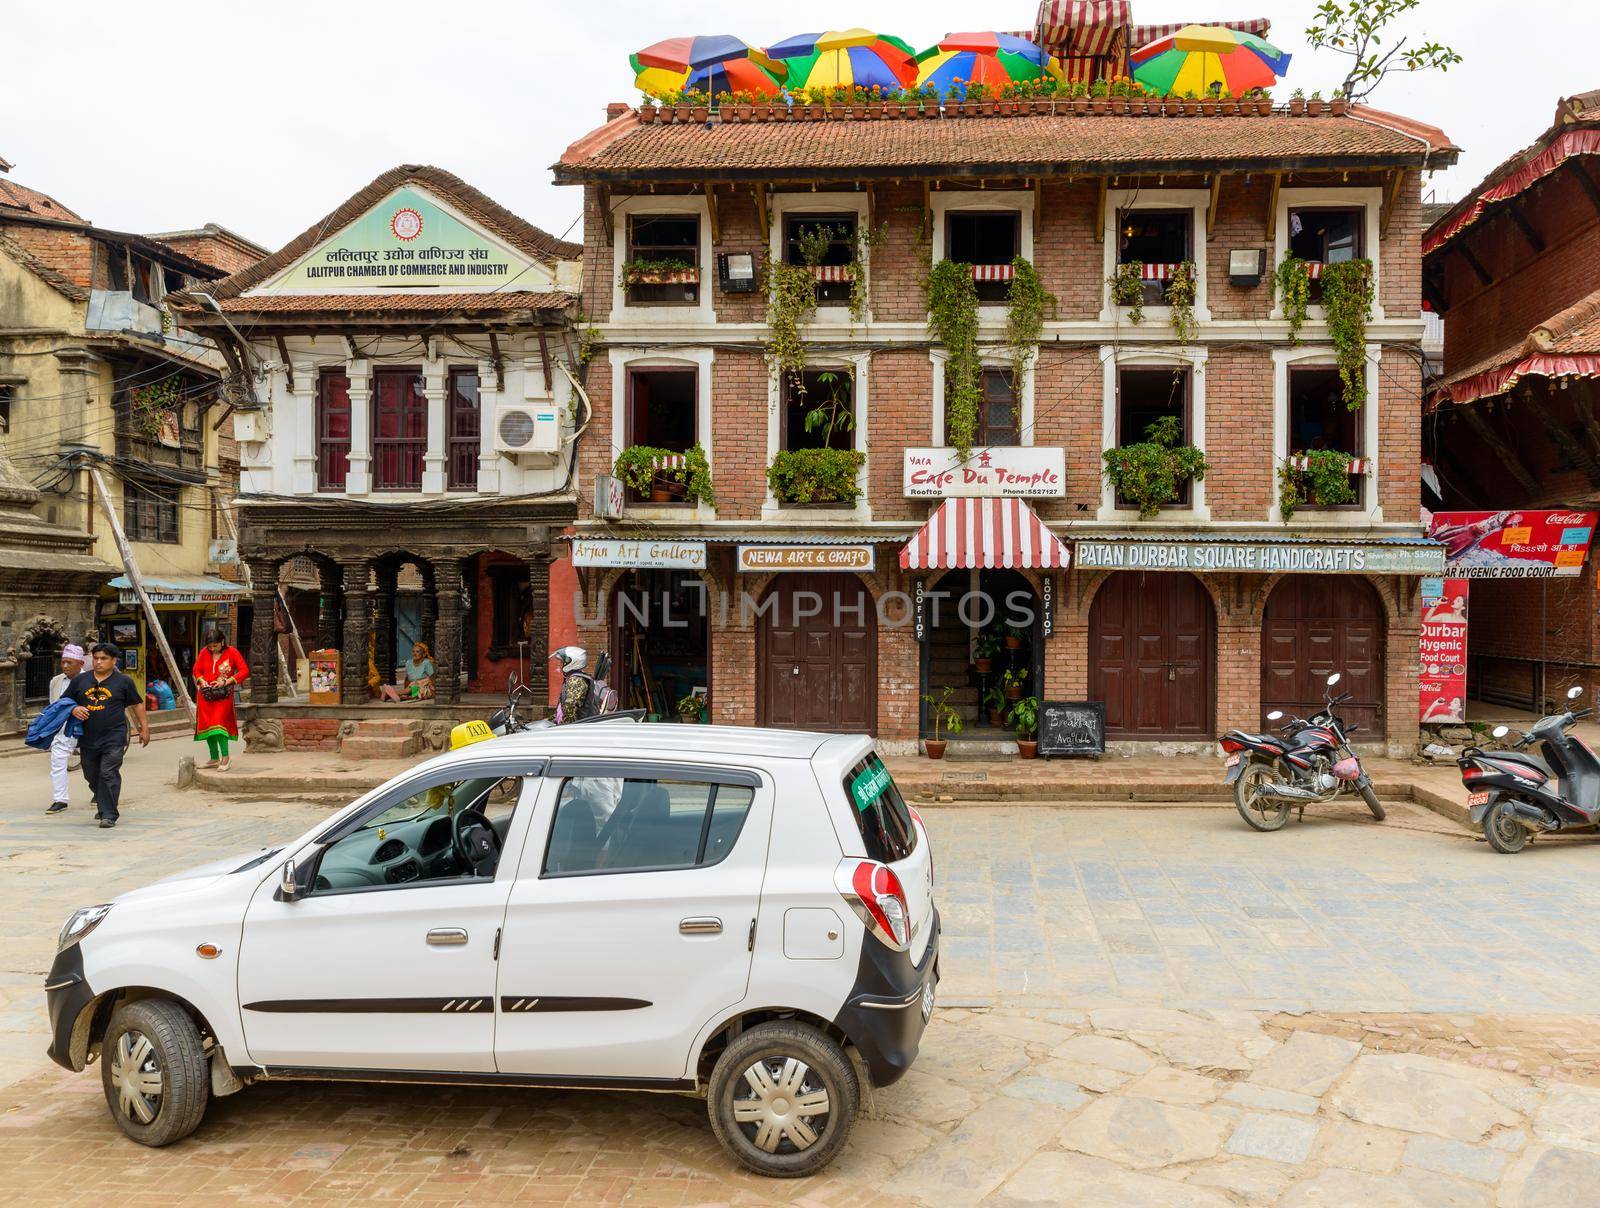 A Suzuki Maruti taxi and the Cafe du Temple on Patan Durbar Square. by dutourdumonde